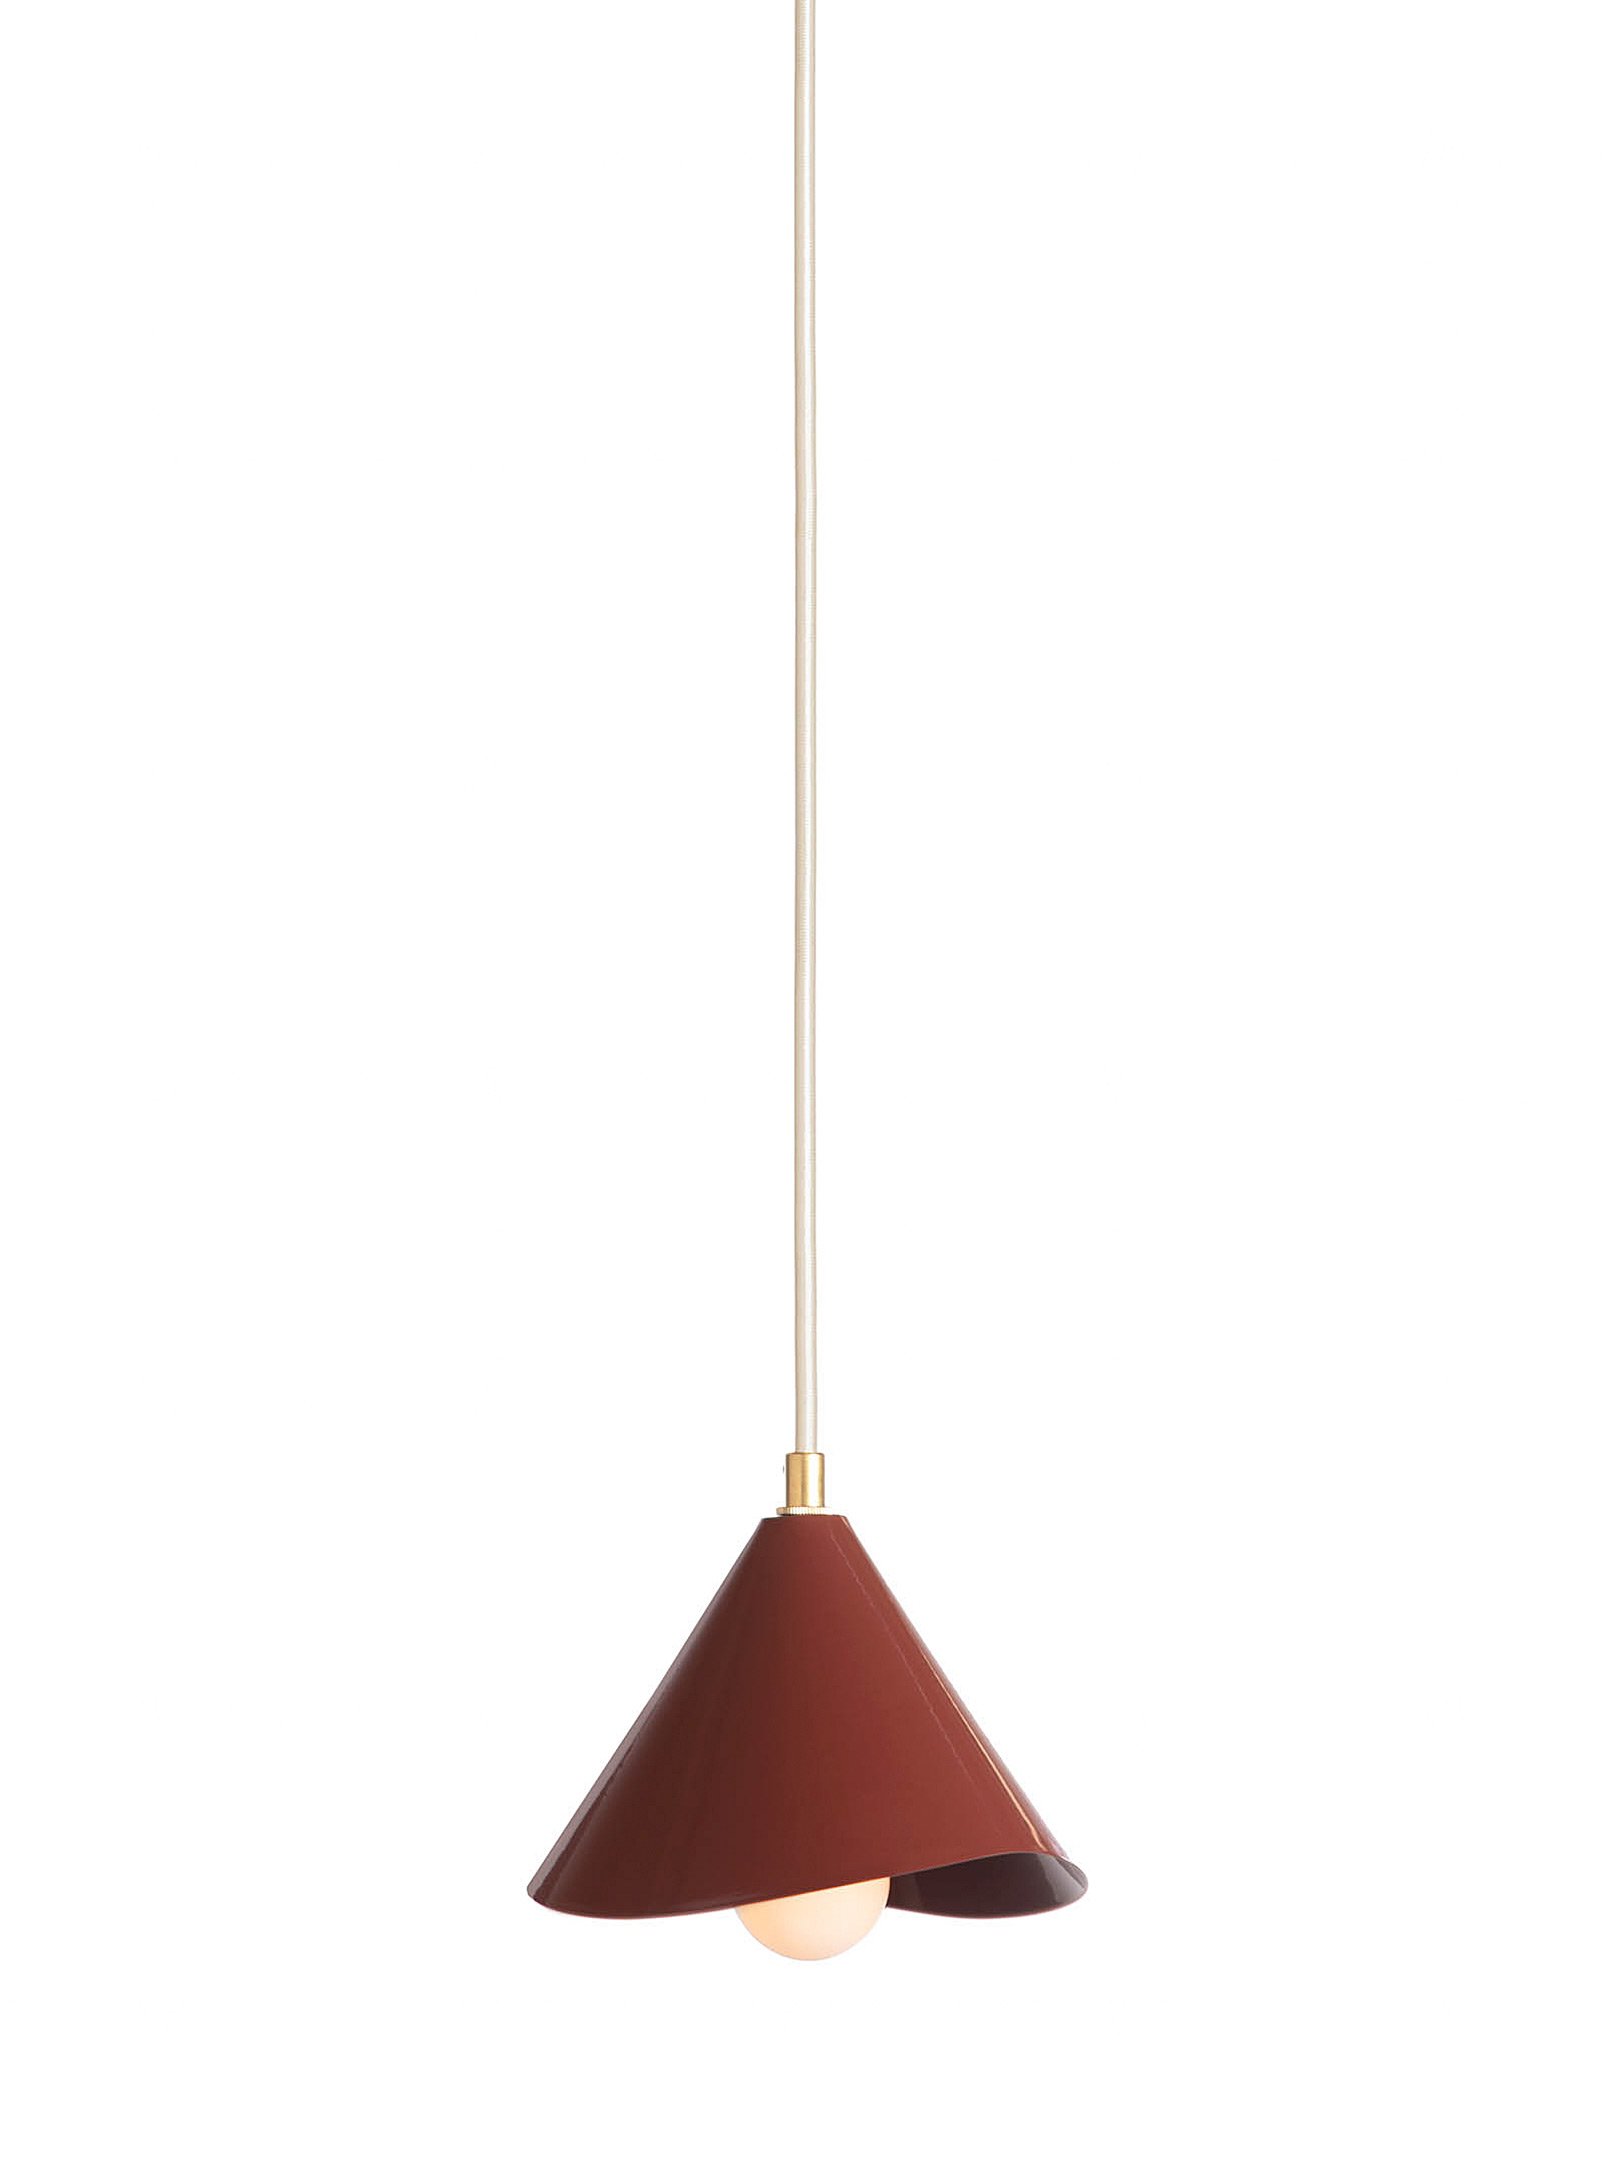 Luminaire Authentik Lotus Hanging Lamp In Ruby Red